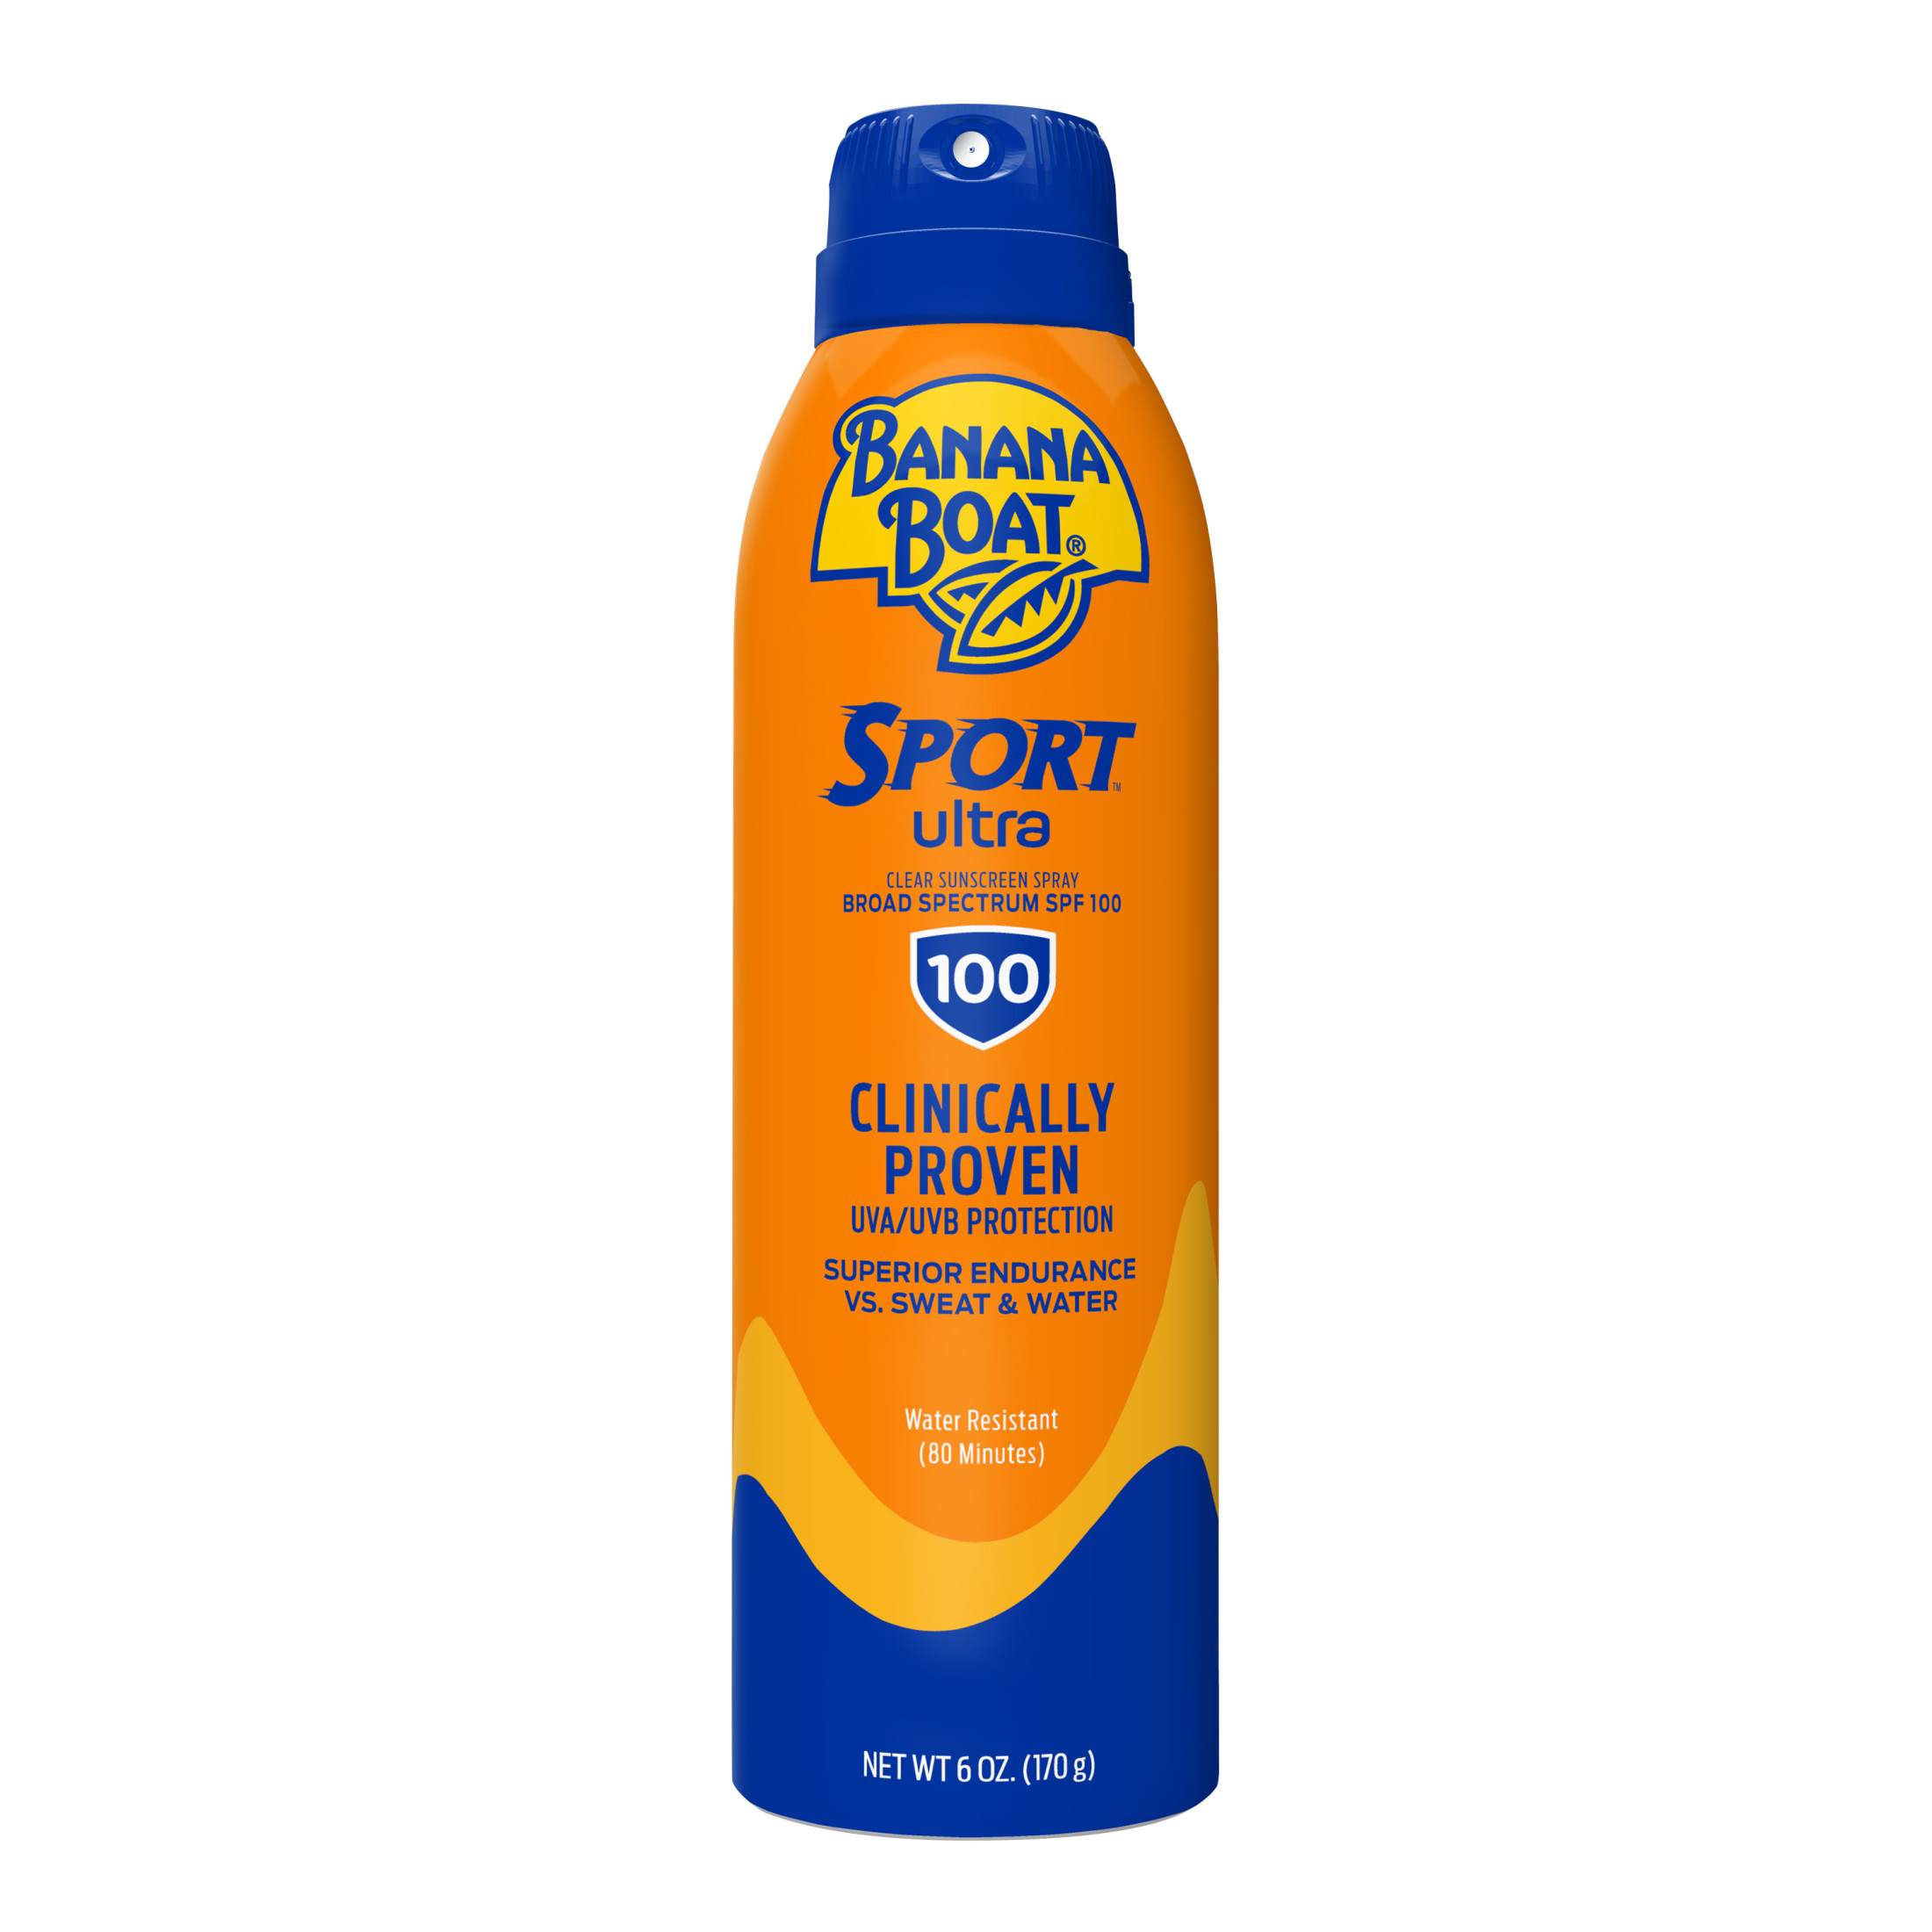 Banana Boat Sport Ultra 100 SPF Sunscreen Spray, 6 Oz, Water Resistant (80 Minutes) Sun Block - image 1 of 9